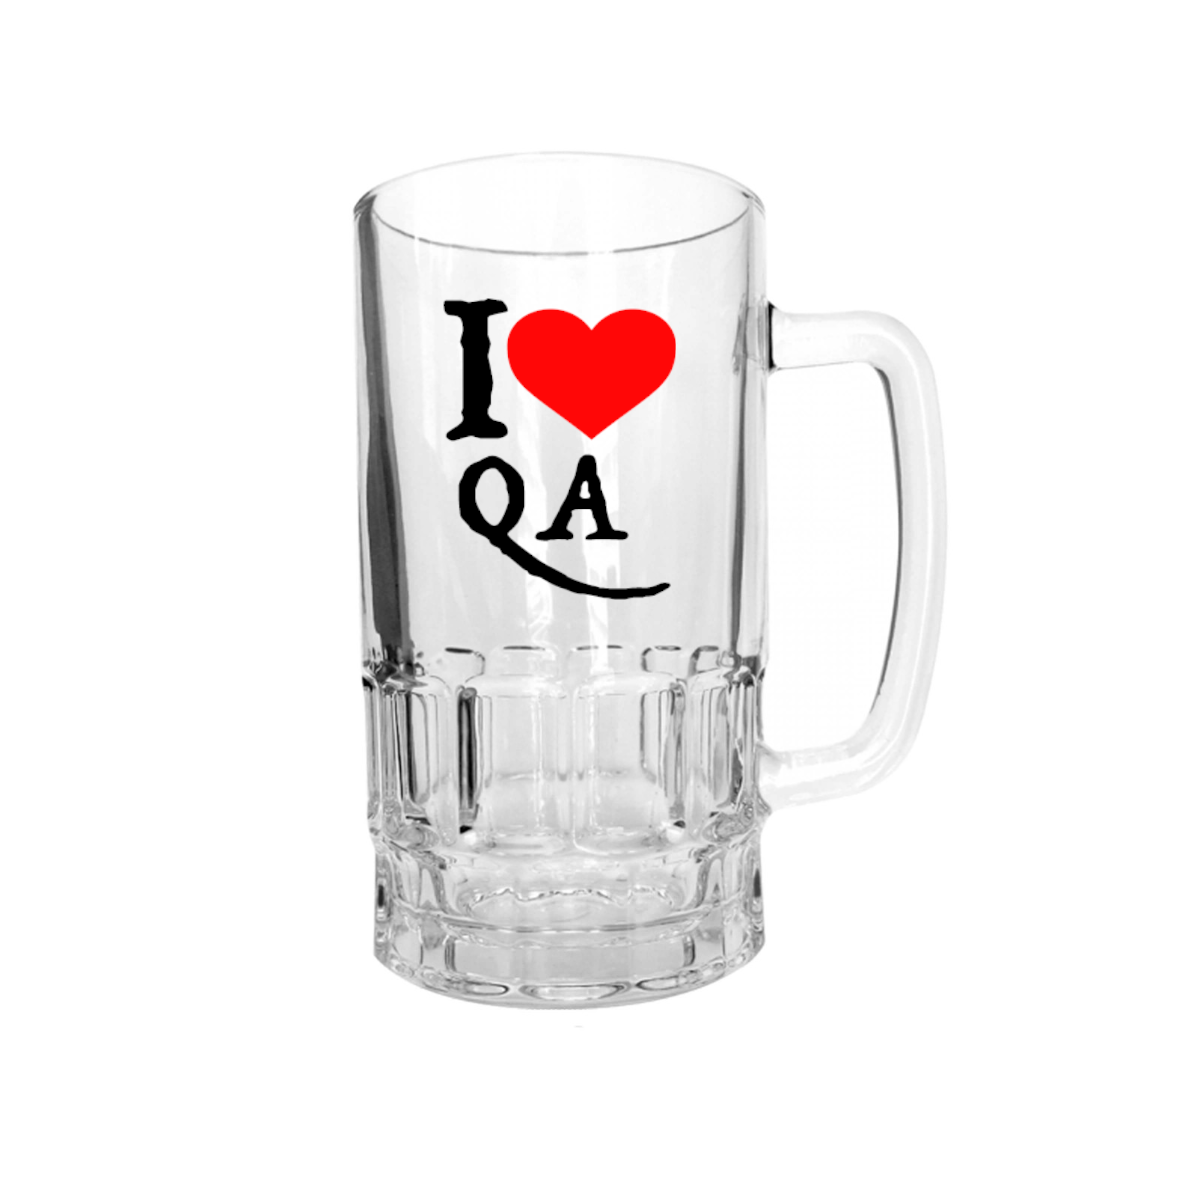 AGAD Turista (I Love Qatar Glass Beer Stein)